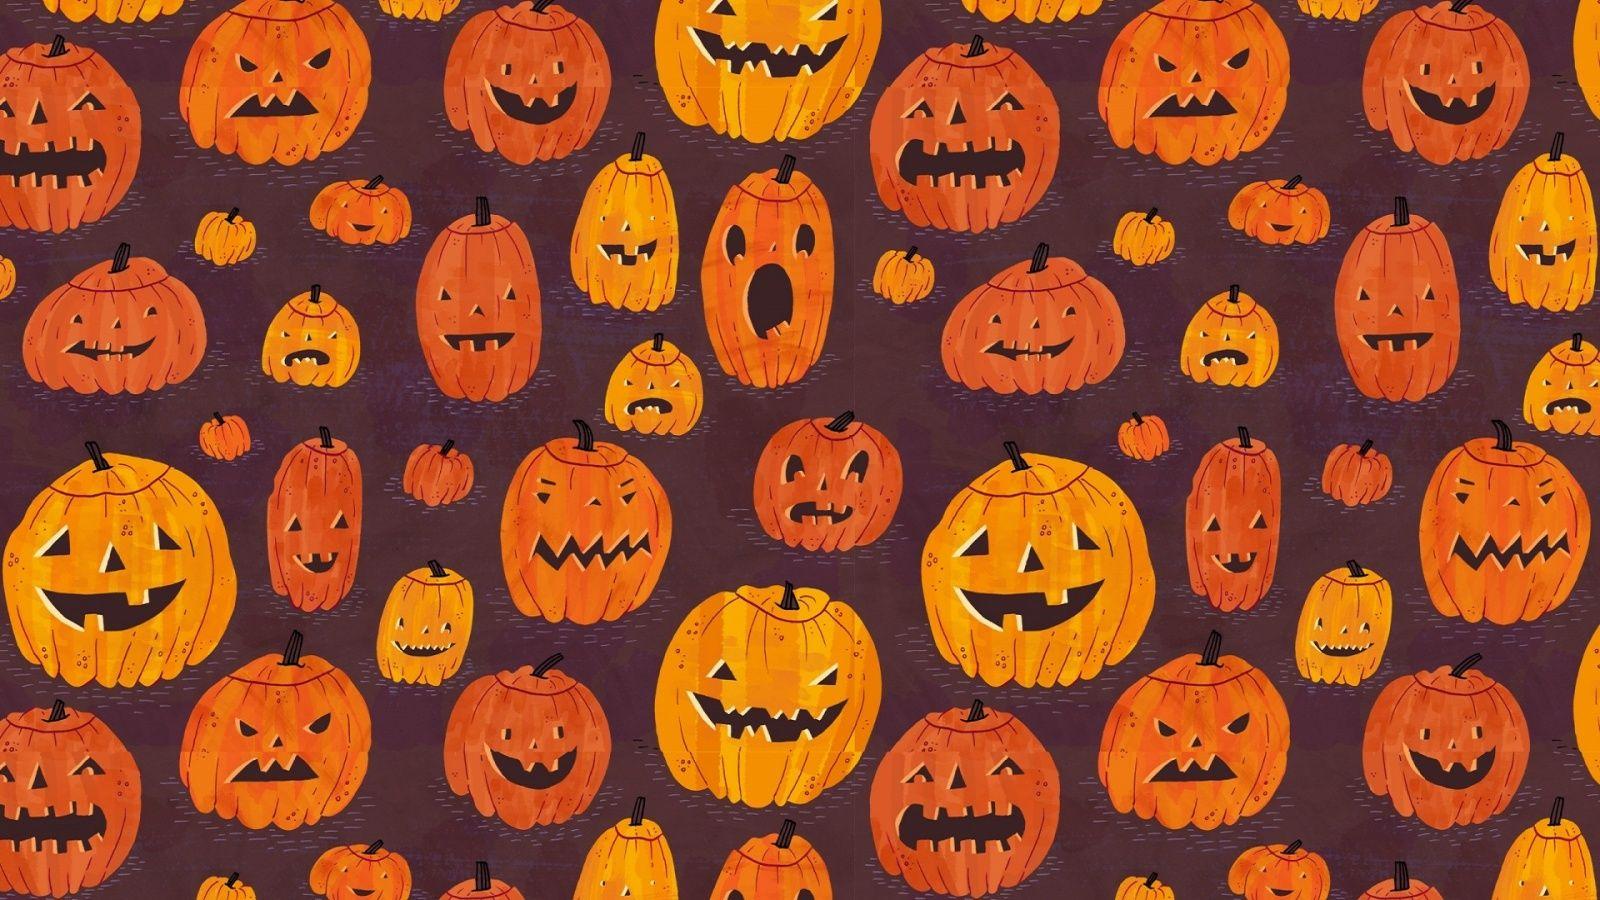 Halloween wallpaper with pumpkins on a dark purple background - Spooky